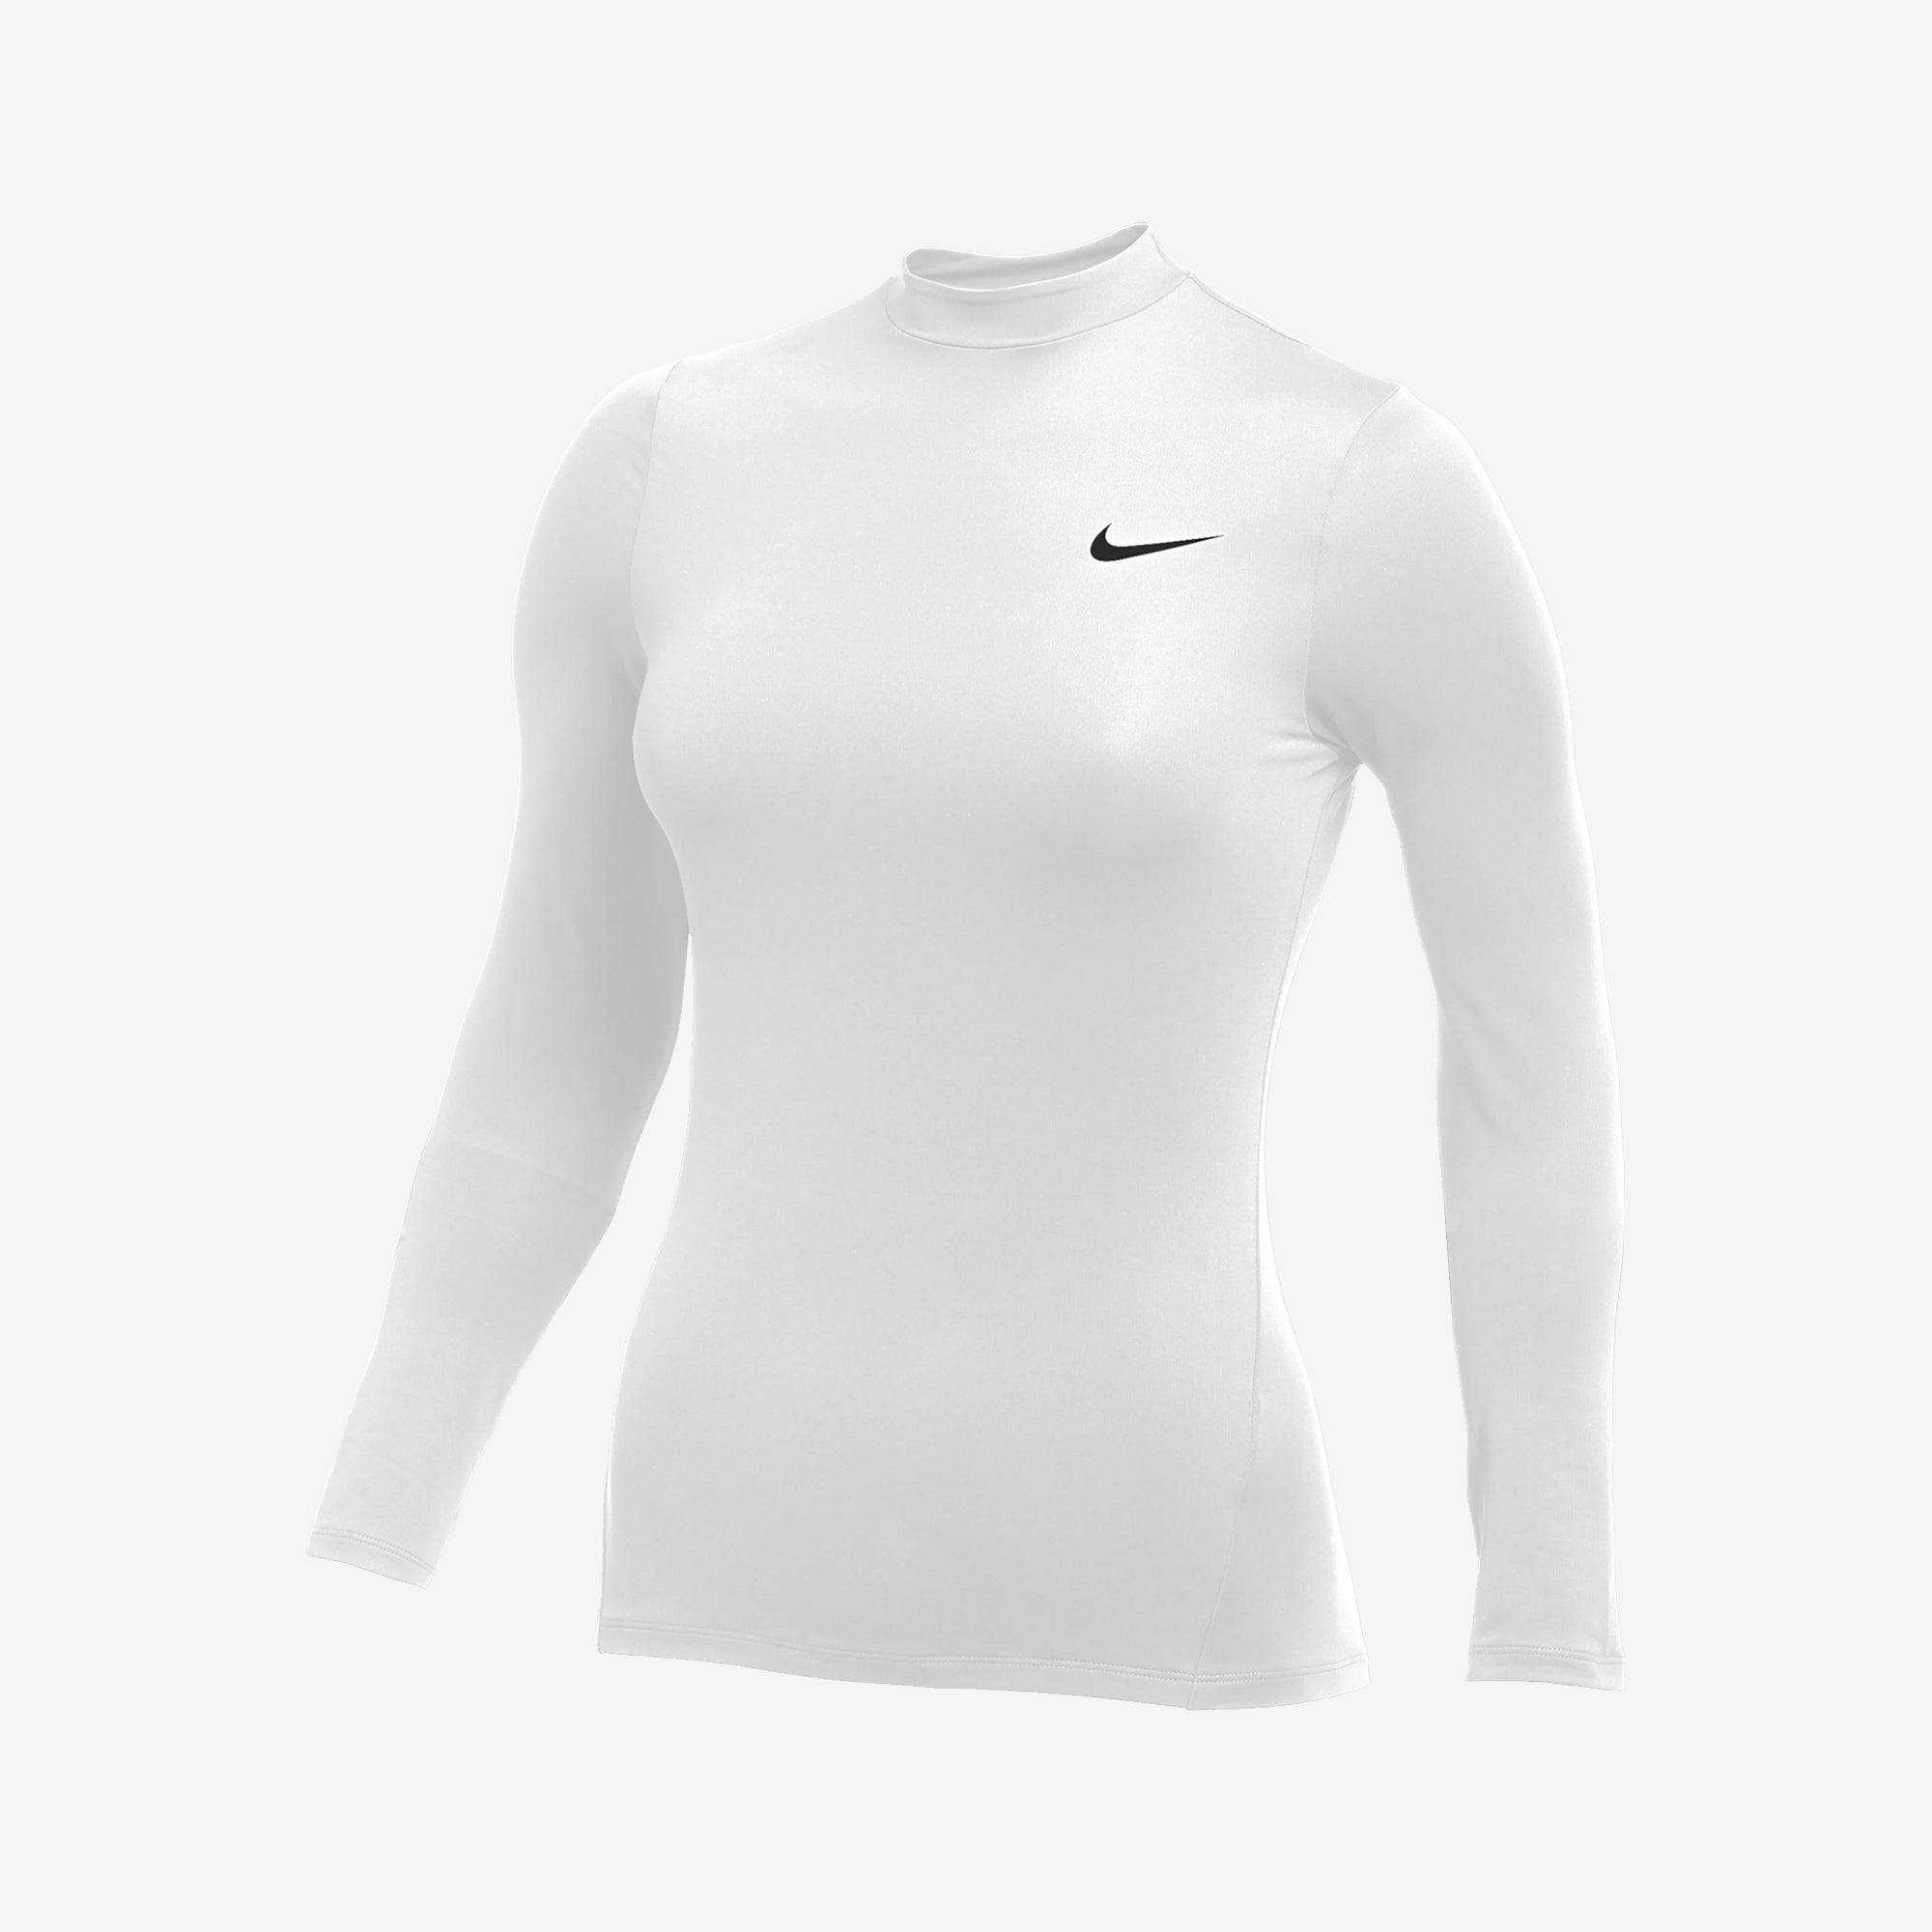 Nike Pro Long Sleeve Warm Top White